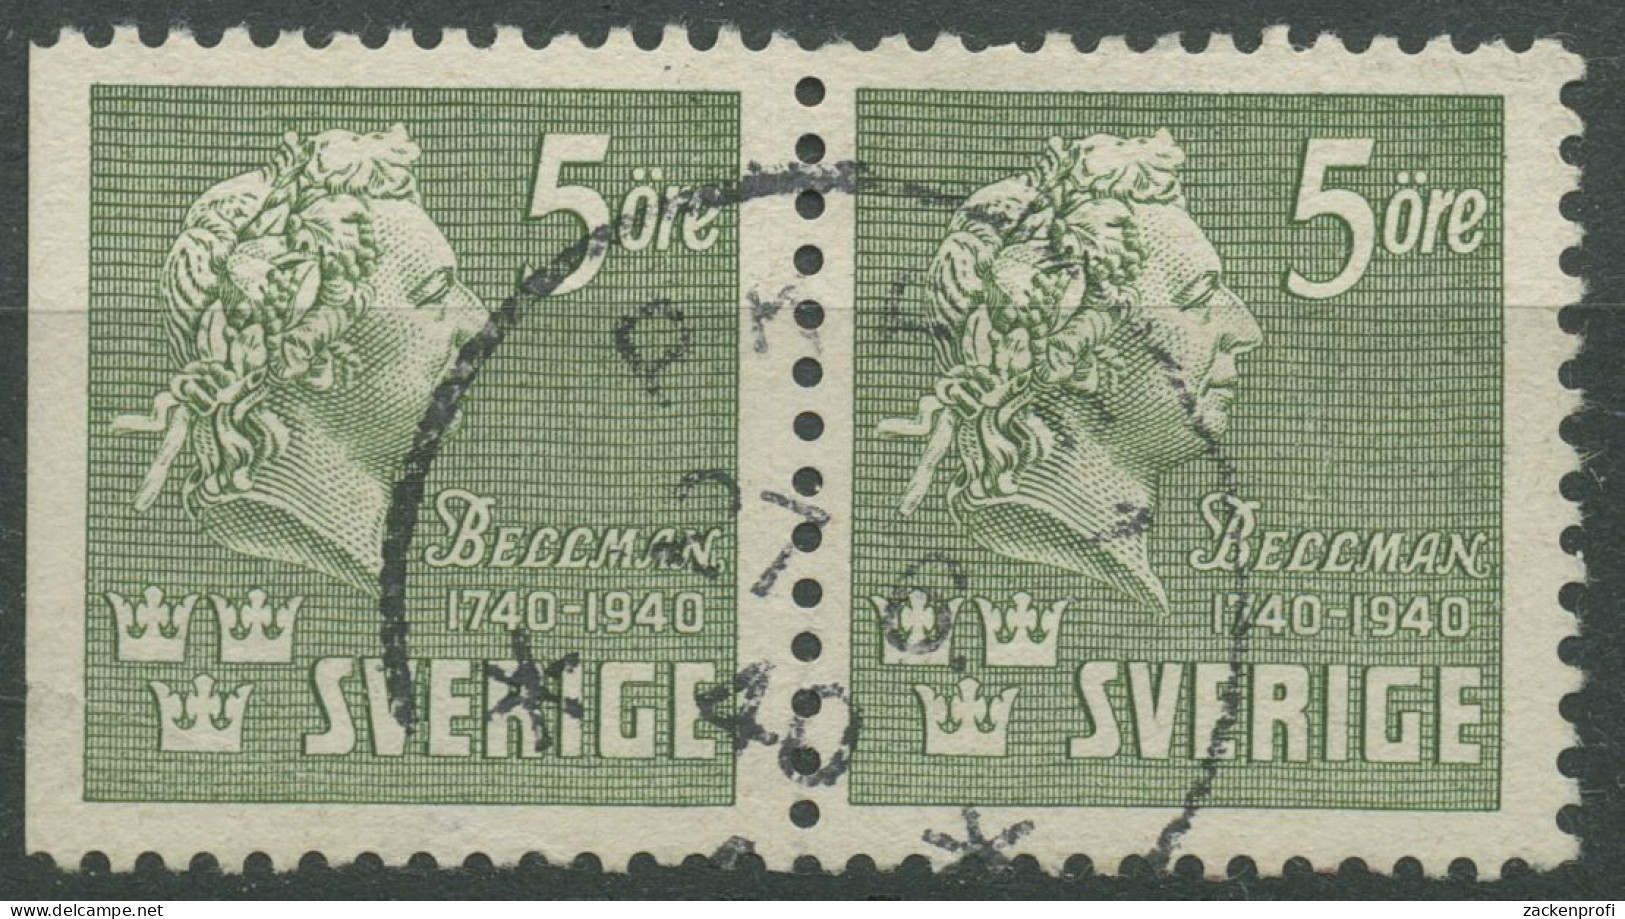 Schweden 1940 Komponist Carl Michael Bellmann 277 Dl/B Gestempelt, Bügig - Used Stamps